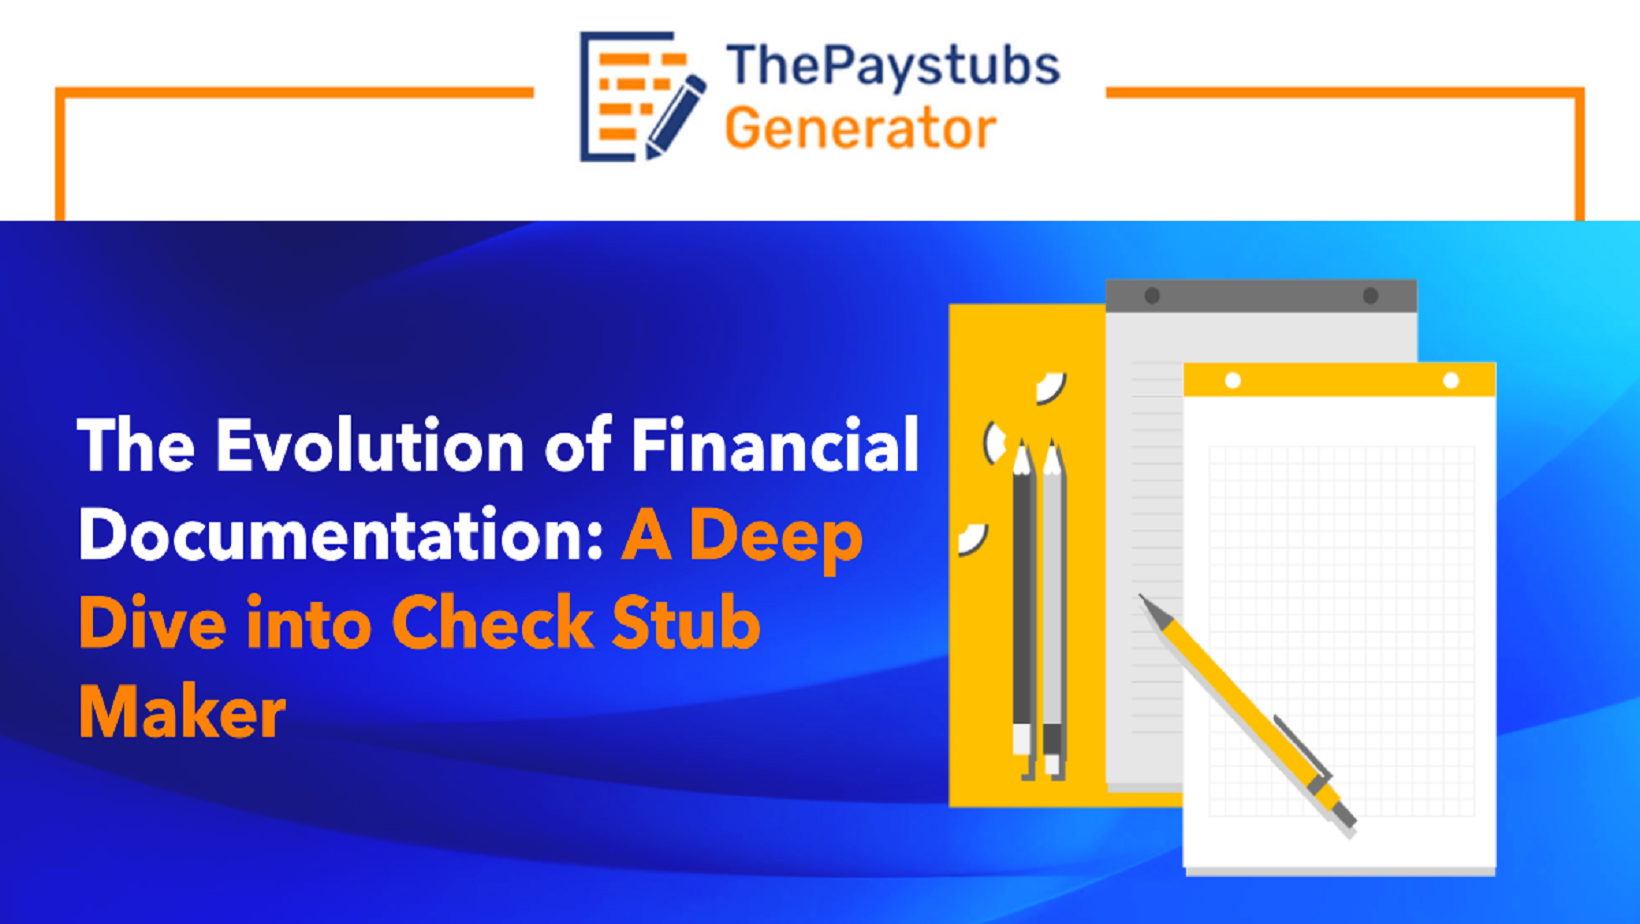 The Evolution of Financial Documentation: A Deep Dive into Check Stub Maker